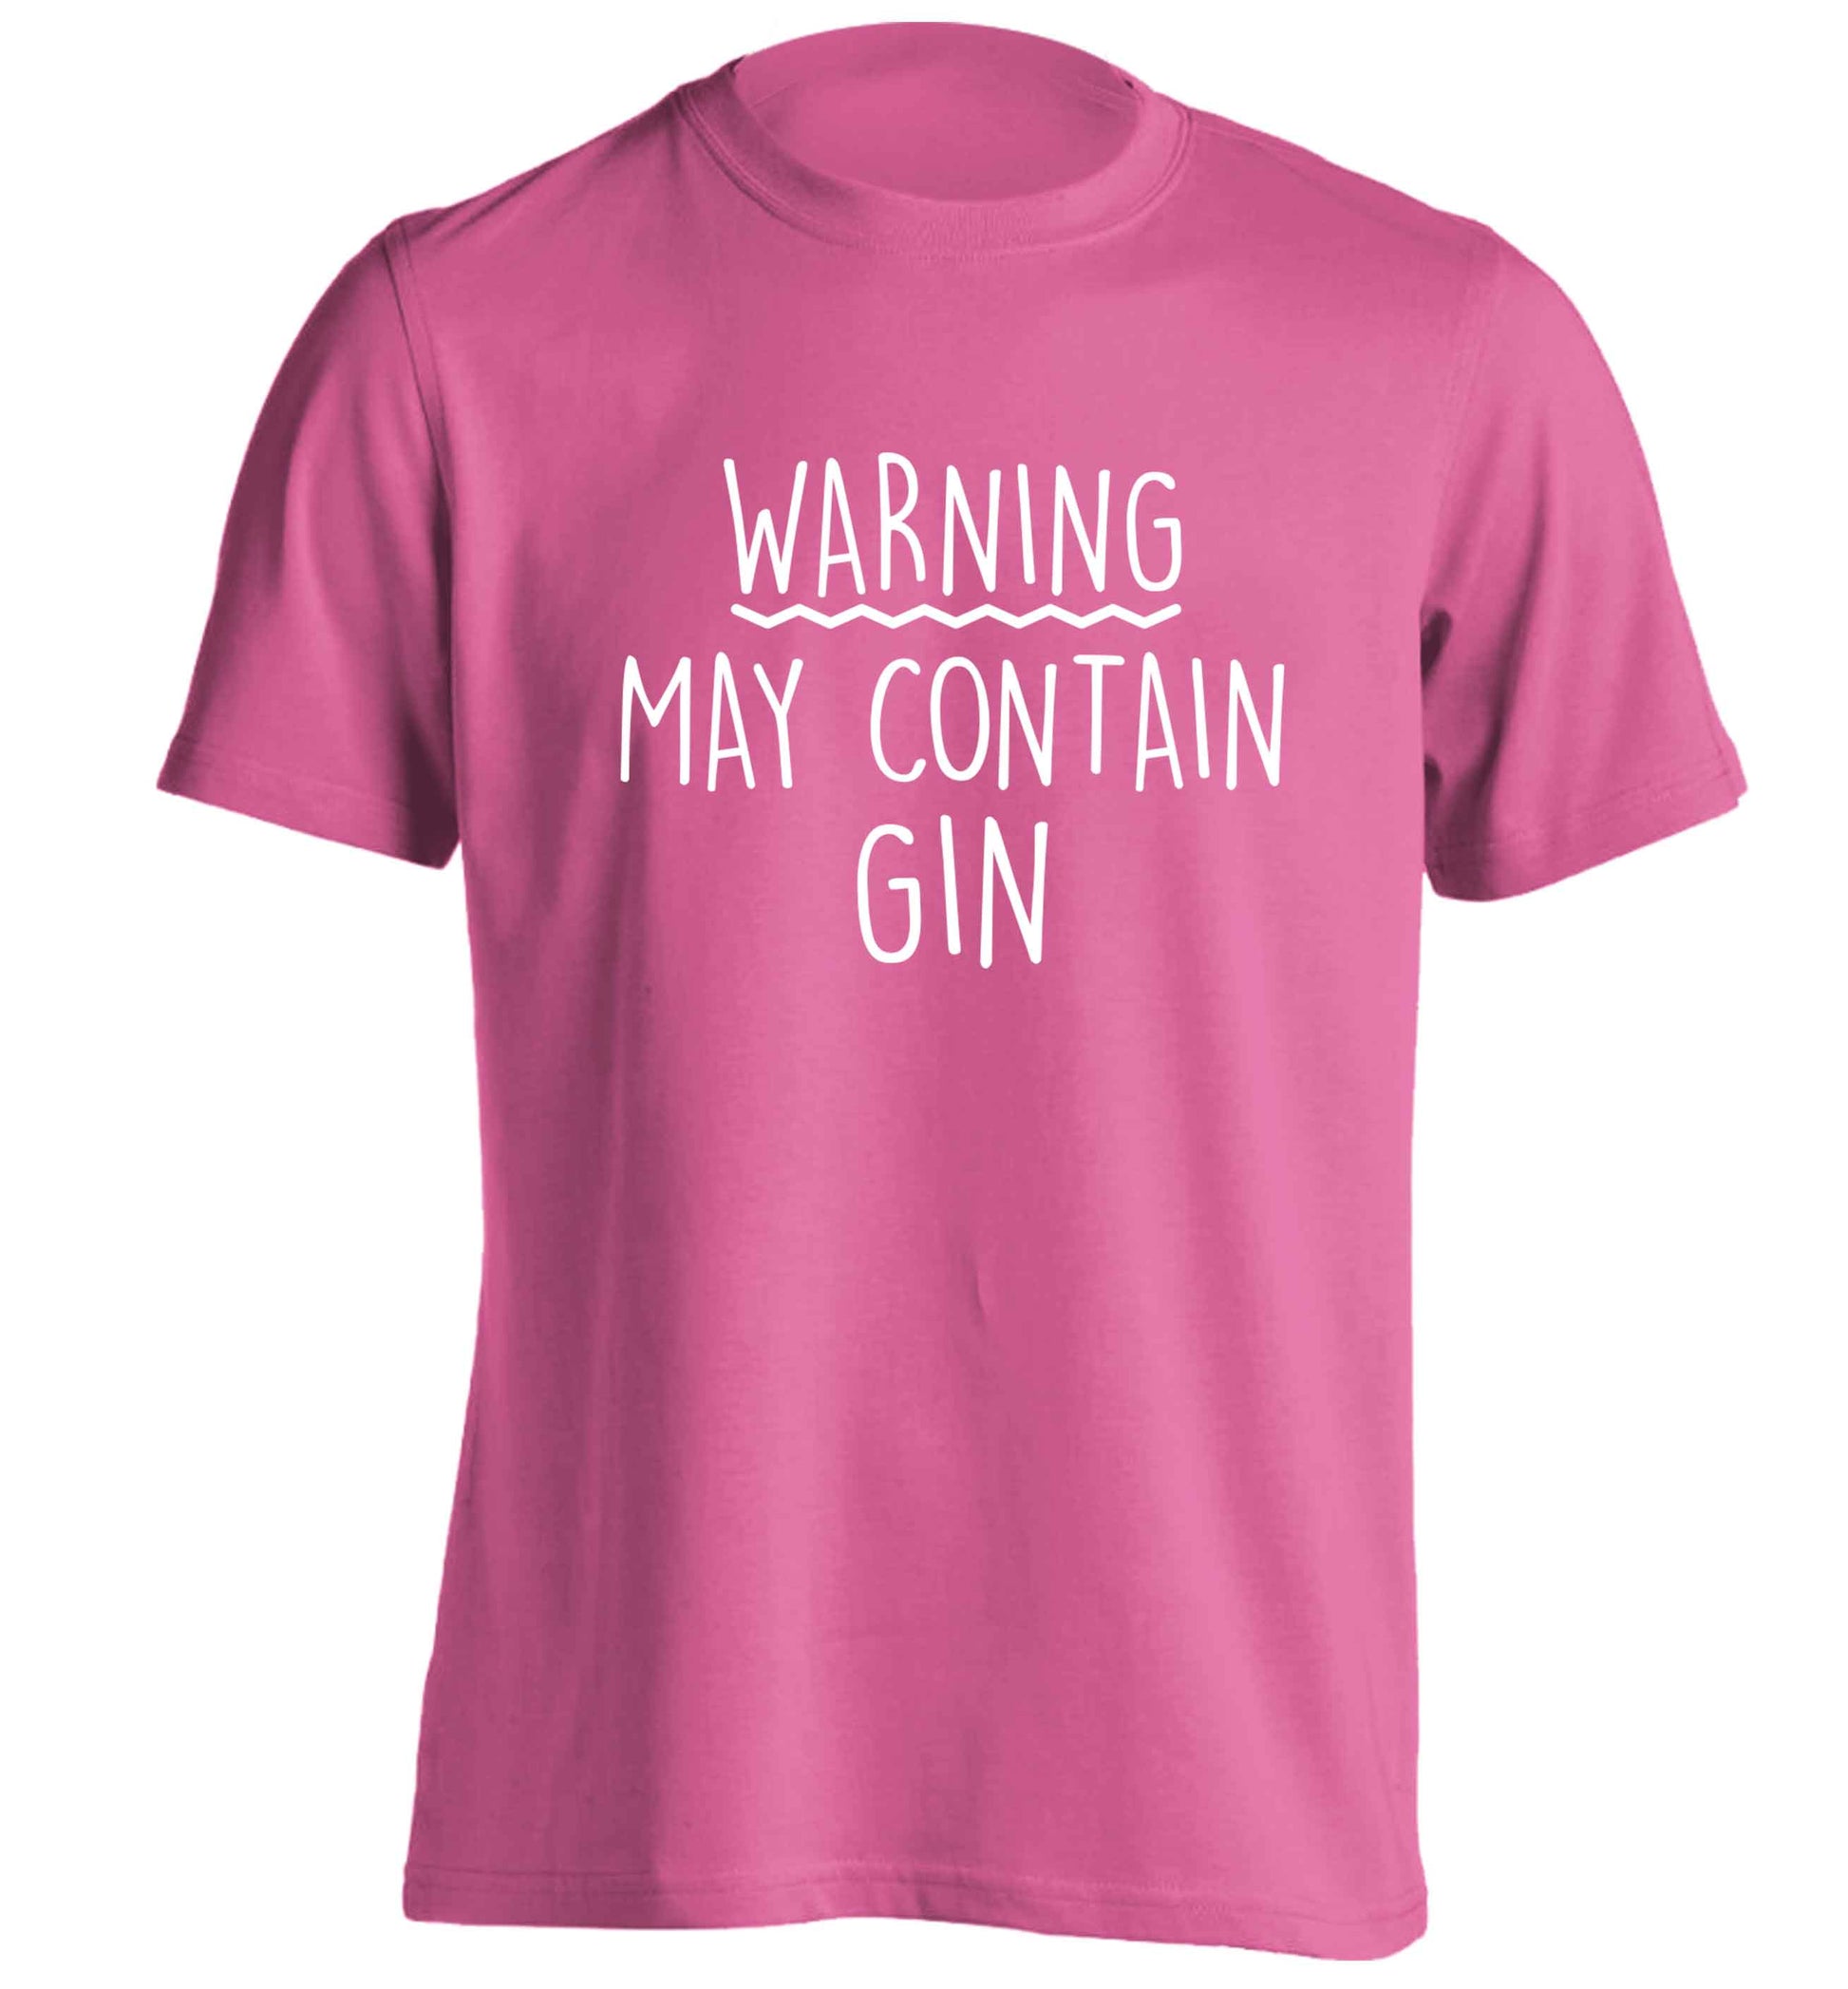 Warning may contain gin adults unisex pink Tshirt 2XL